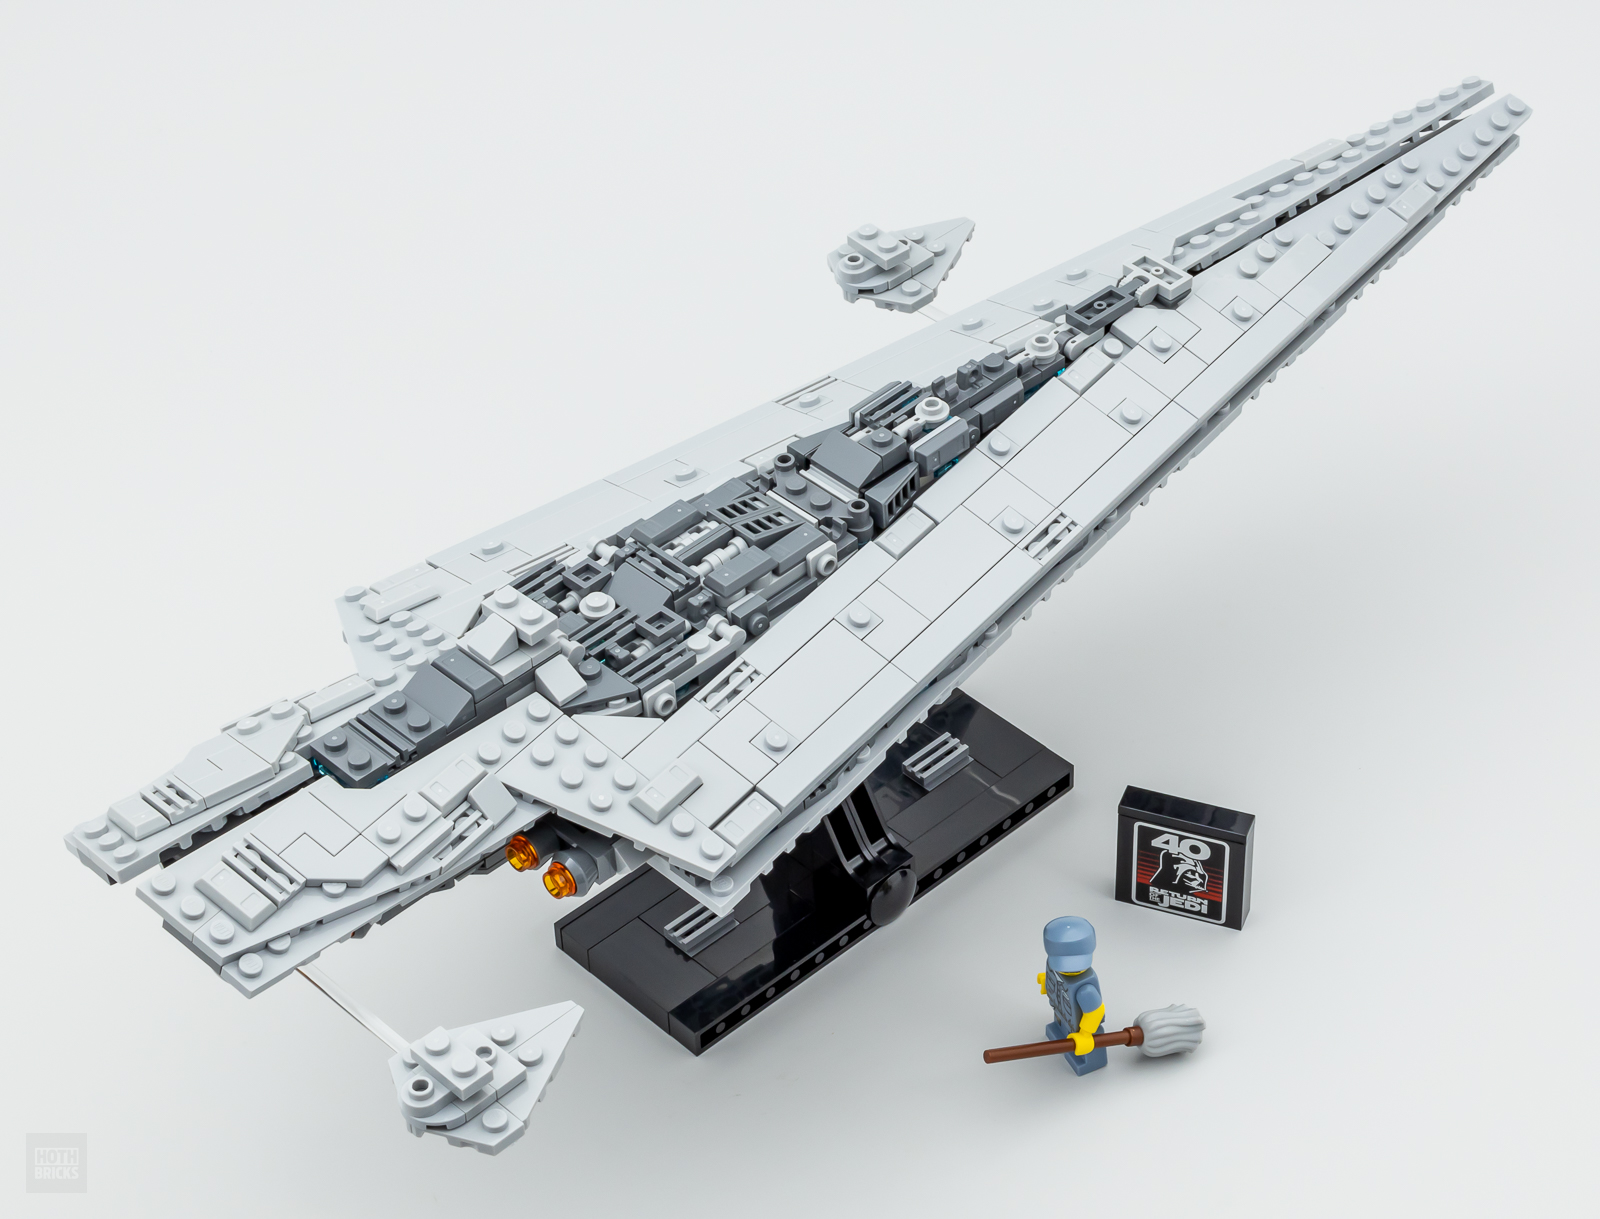 Lego Star Wars super star destroyer set: Price, release date and